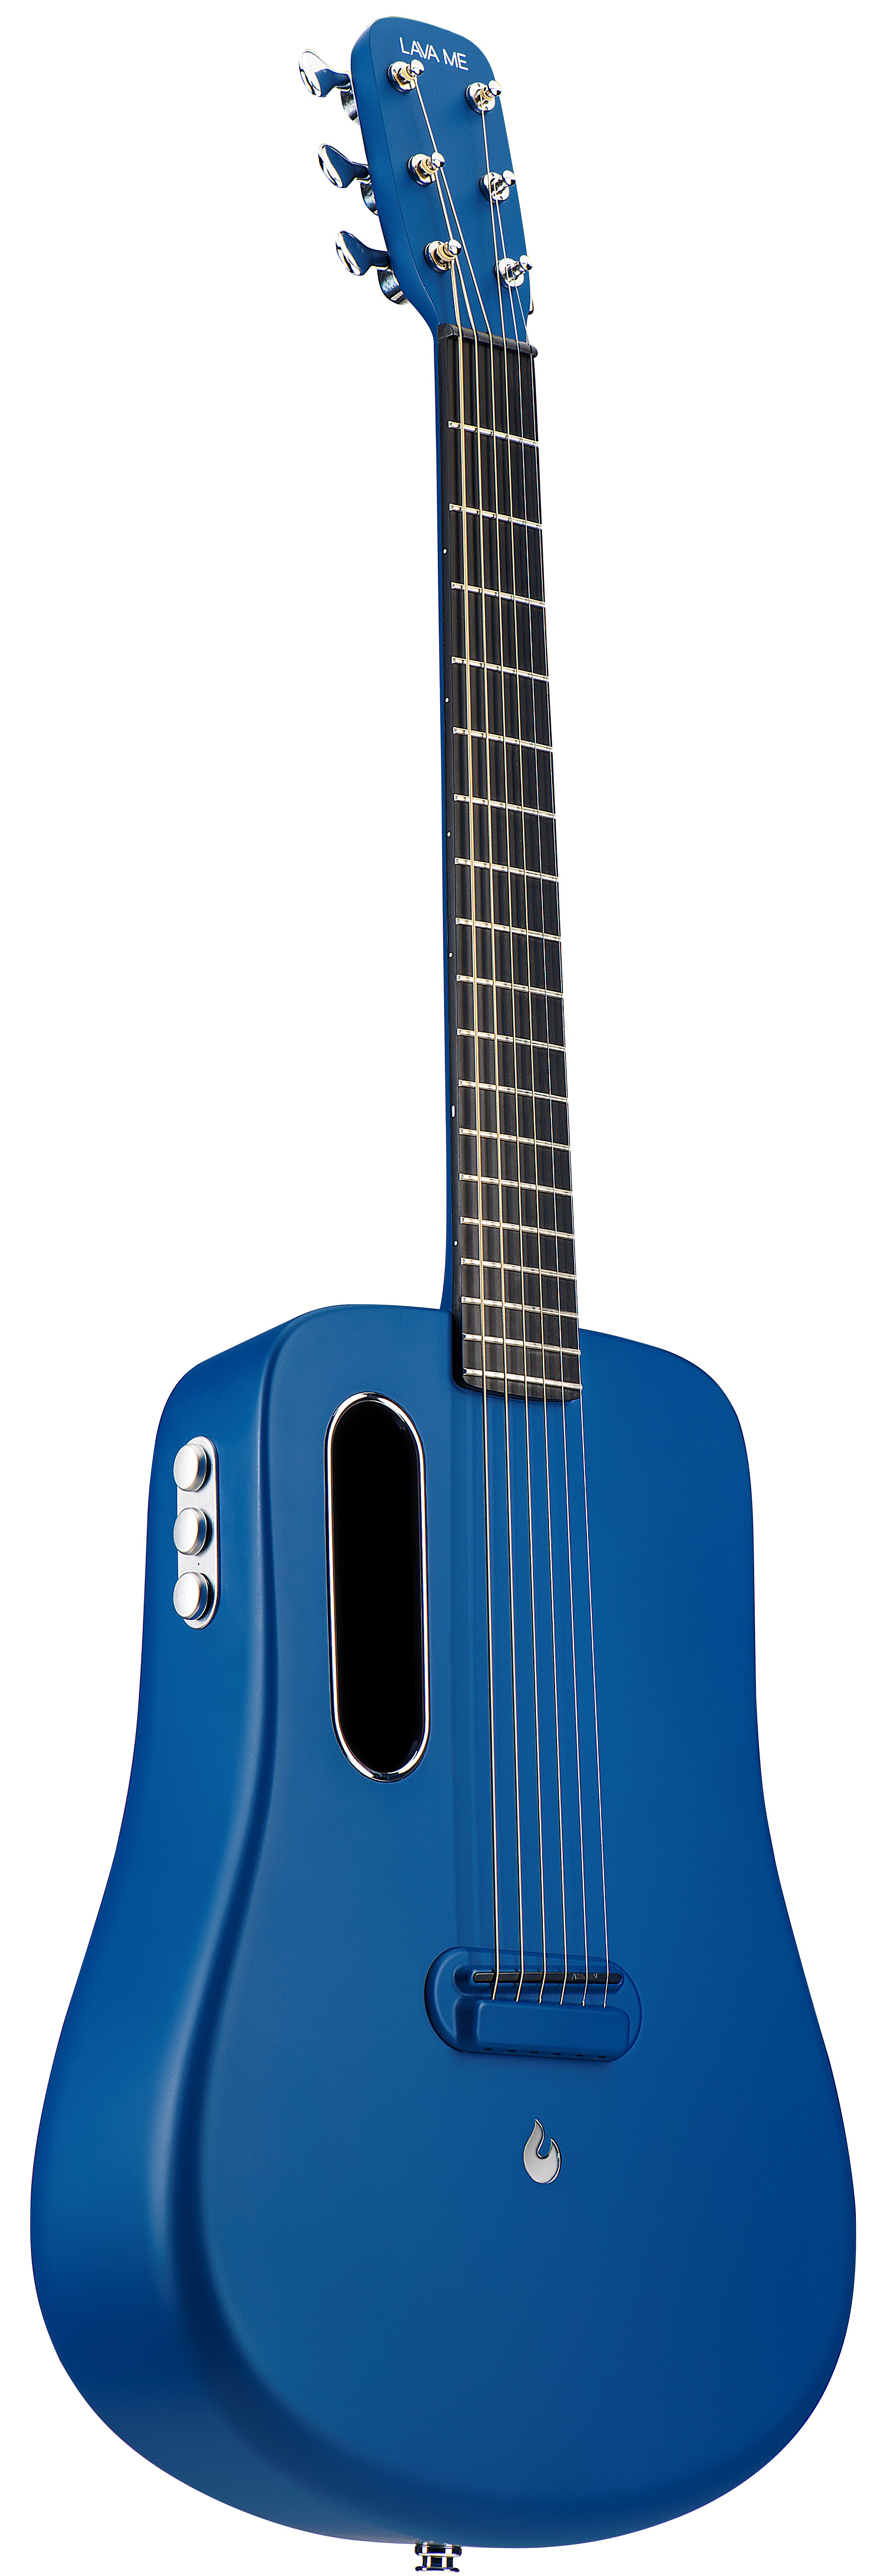 Køb Lava ME 2 Freeboost Blå - Carbon Western guitar inkl Gigbag - Pris 5895.00 kr.